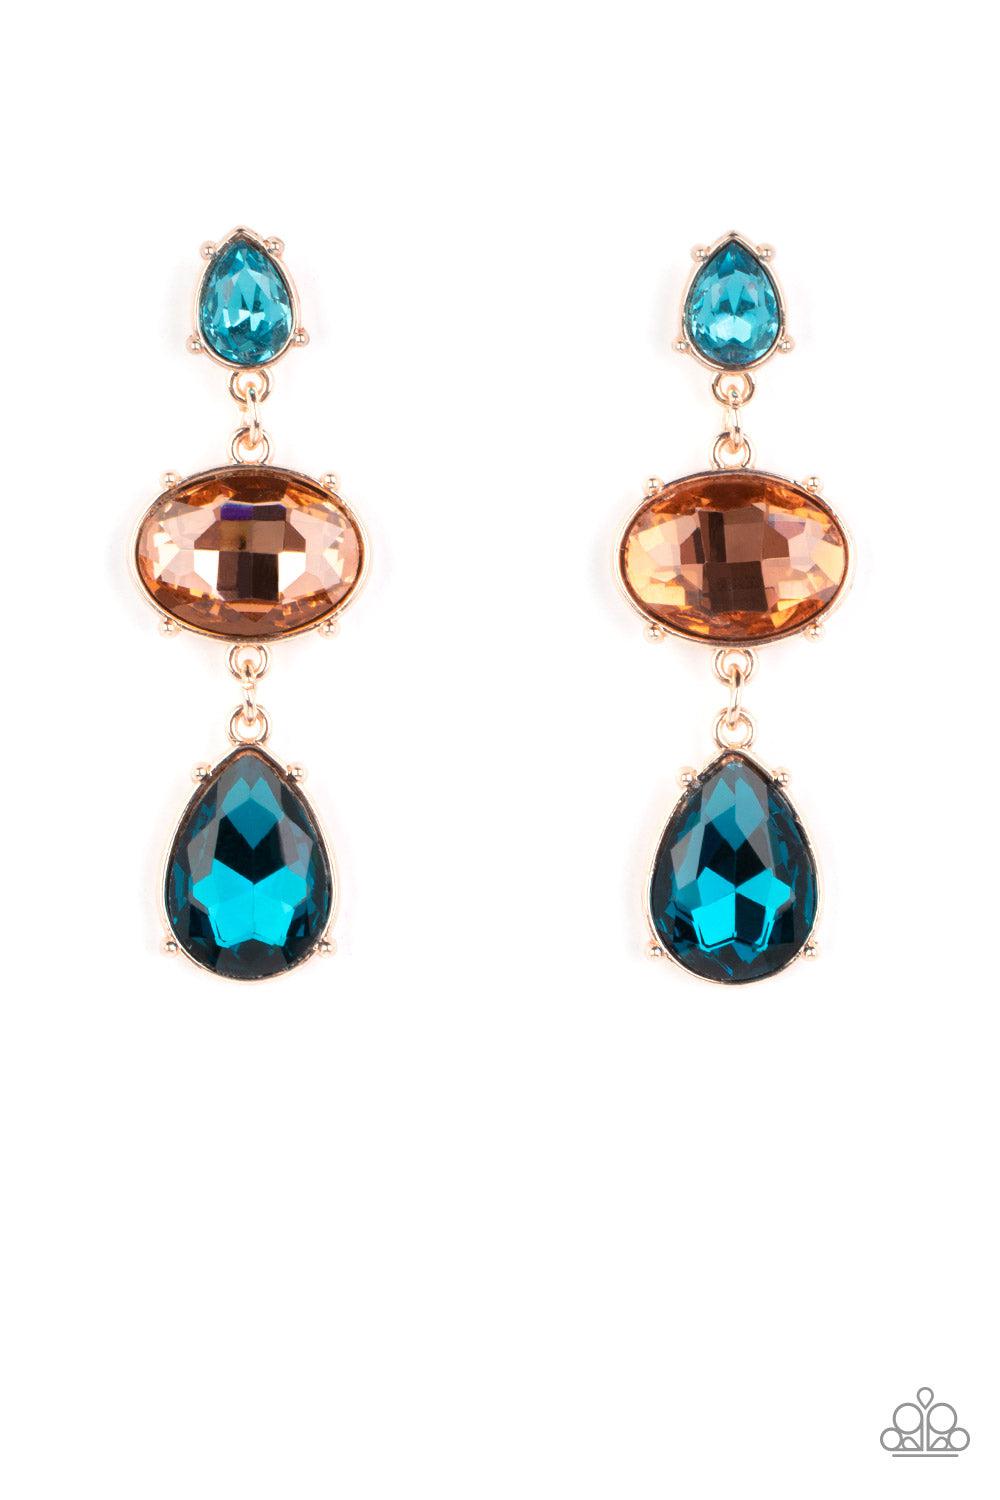 Royal Appeal Multi Blue & Peach Rhinestone Earrings - Paparazzi Accessories- lightbox - CarasShop.com - $5 Jewelry by Cara Jewels